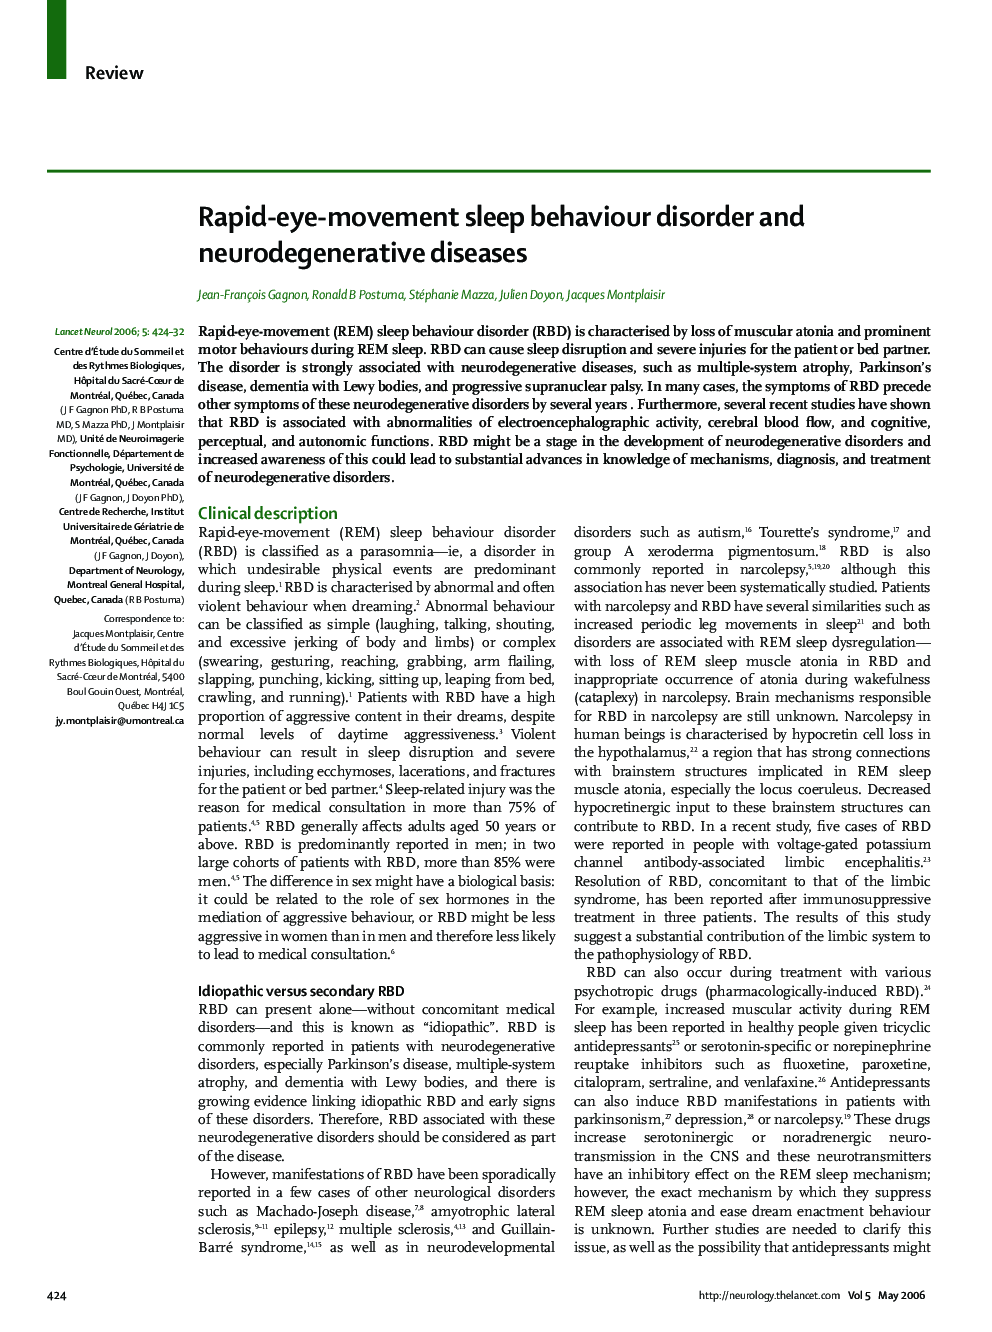 Rapid-eye-movement sleep behaviour disorder and neurodegenerative diseases